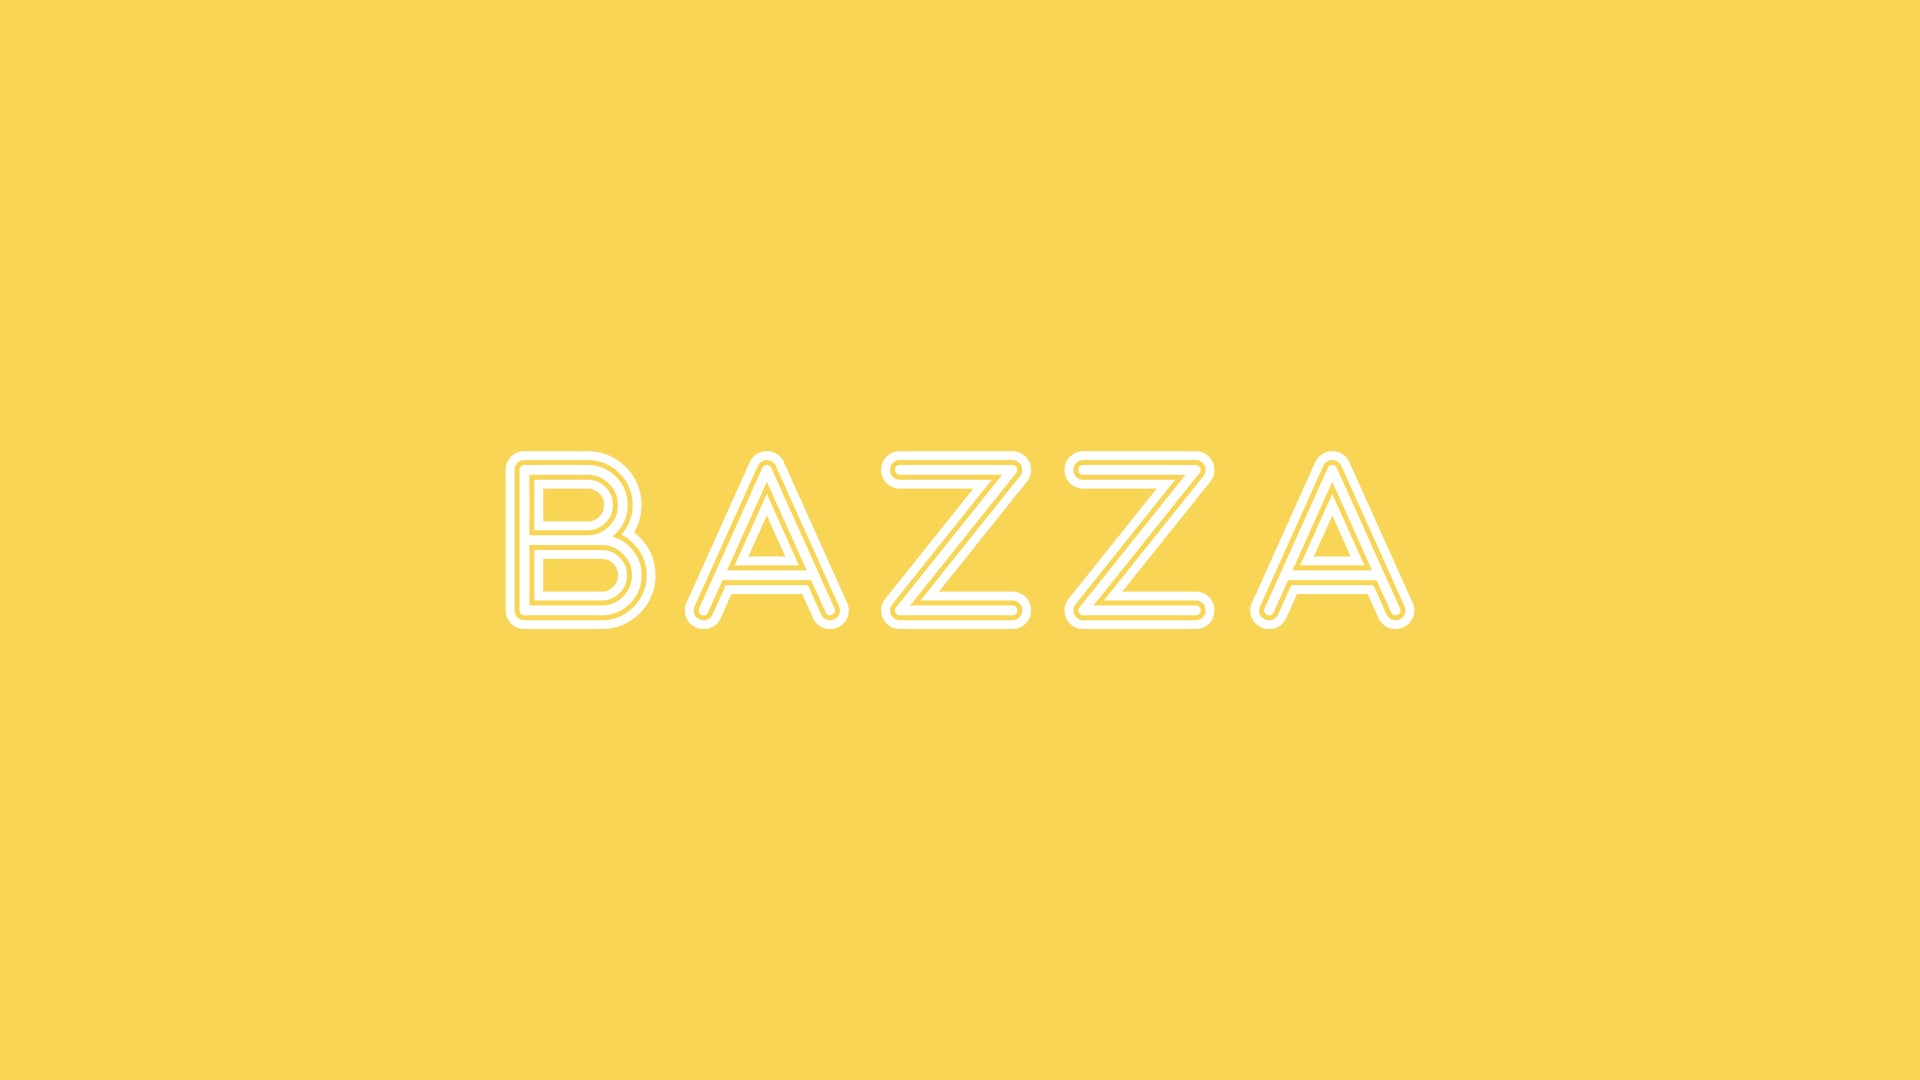 bazza.com